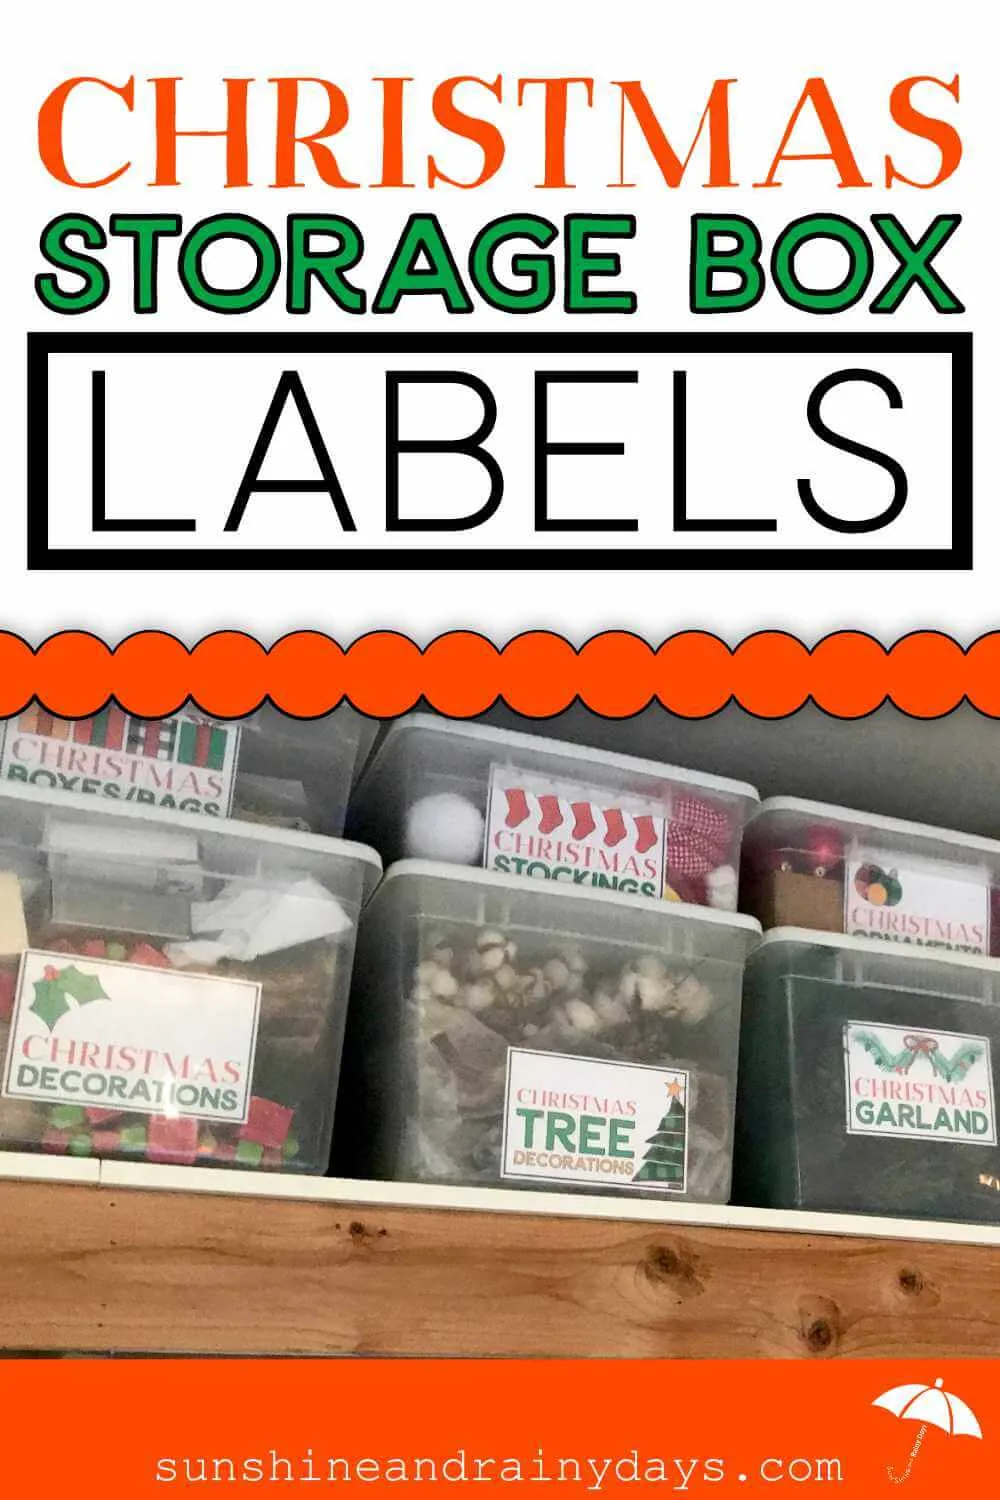 Christmas Storage Box Labels - Sunshine and Rainy Days